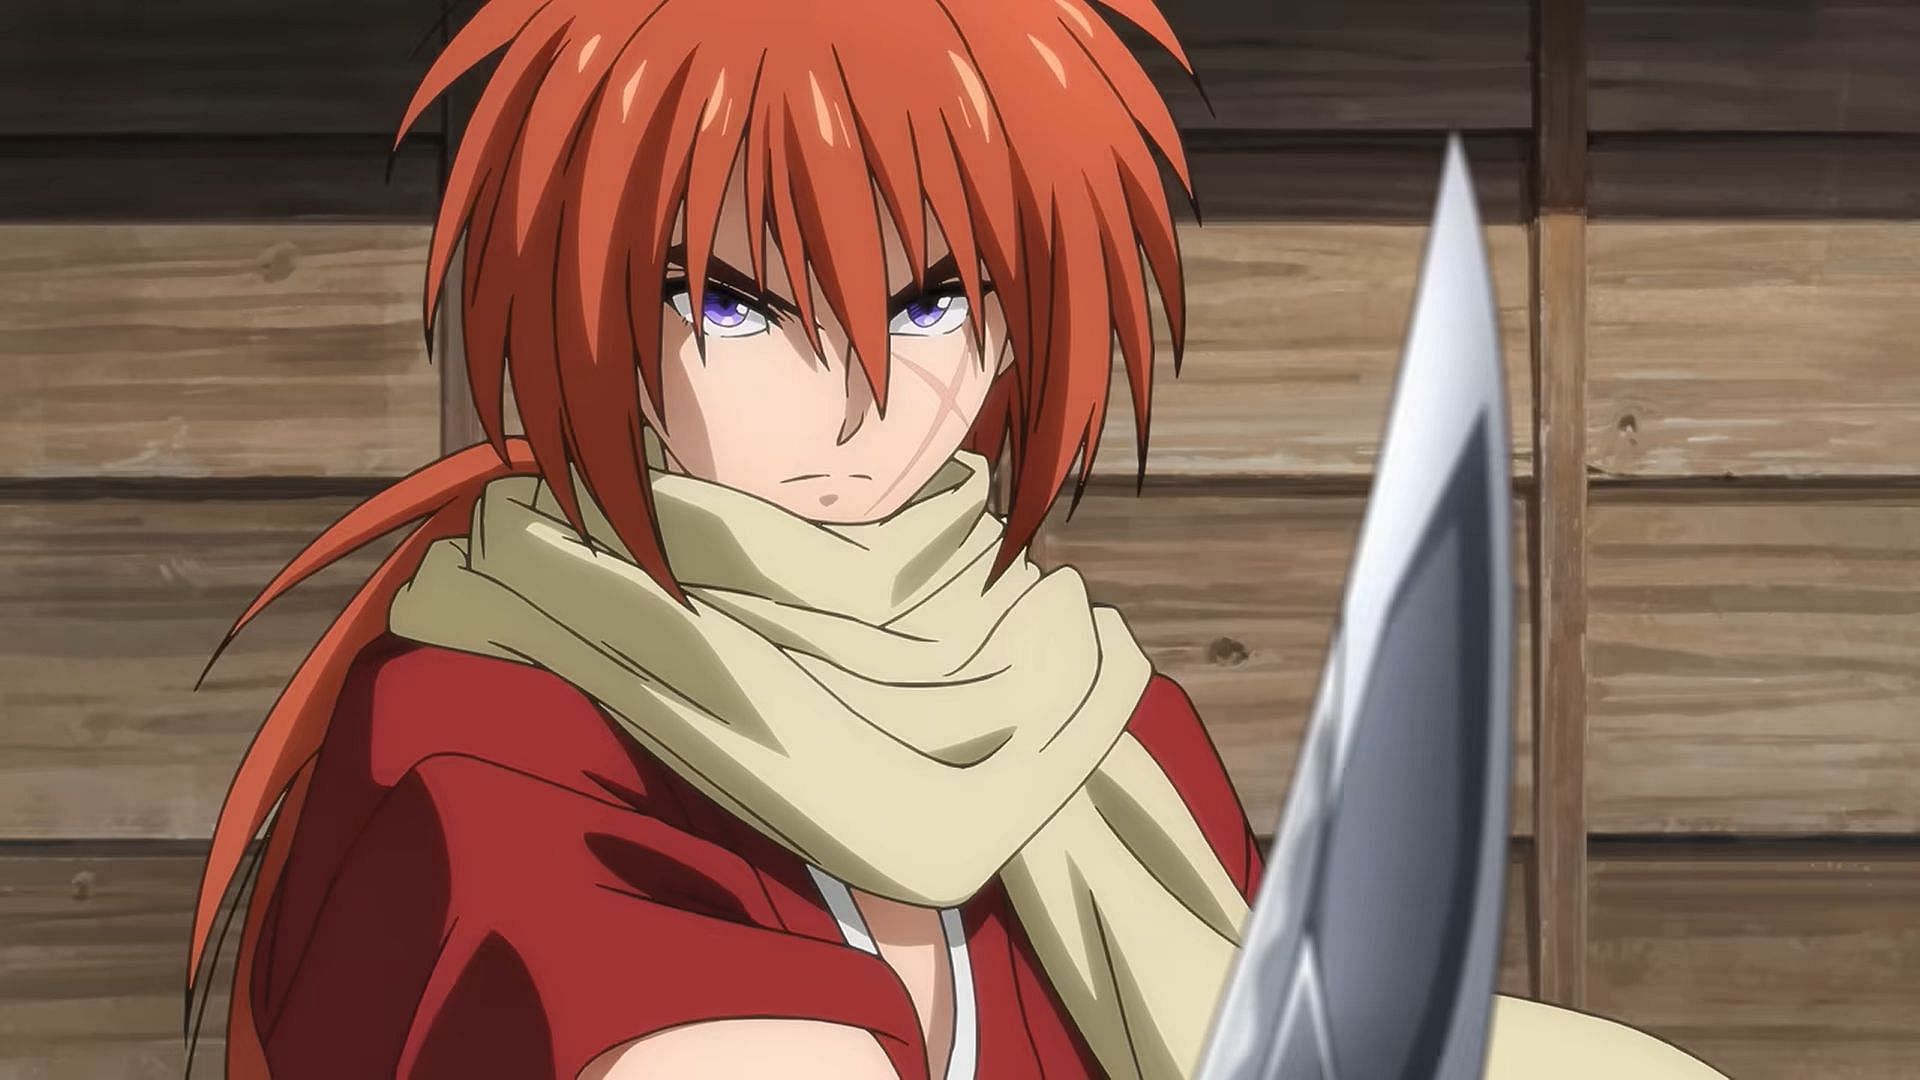 Rurouni Kenshin episode 1: Kenshin and Kaoru meet in an effort to uncover the killer Battosai (Image via Liden Films)